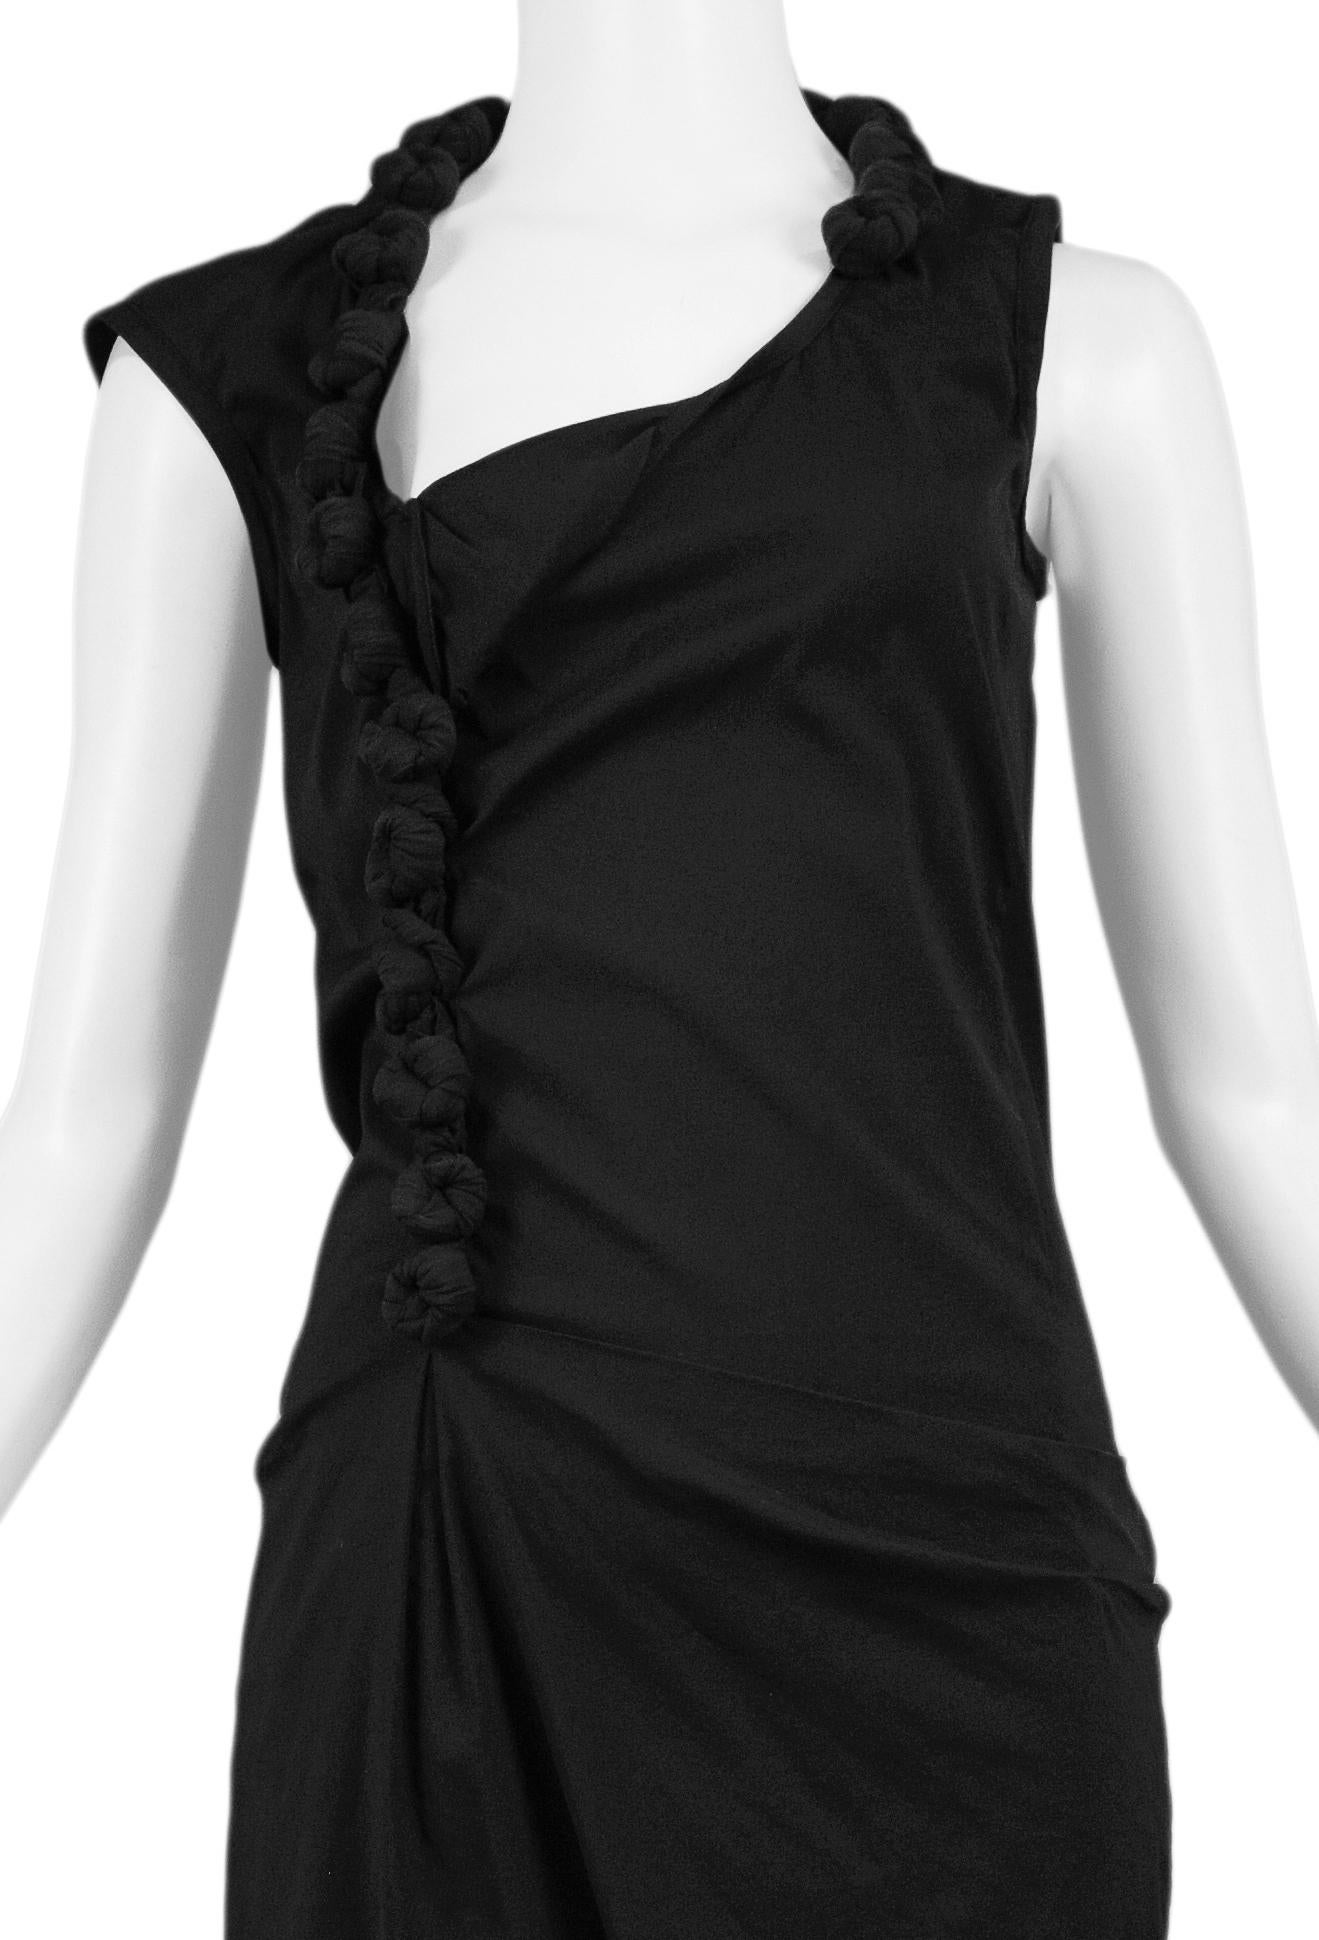 Women's Helmut Lang Black Knot Dress 2005 For Sale